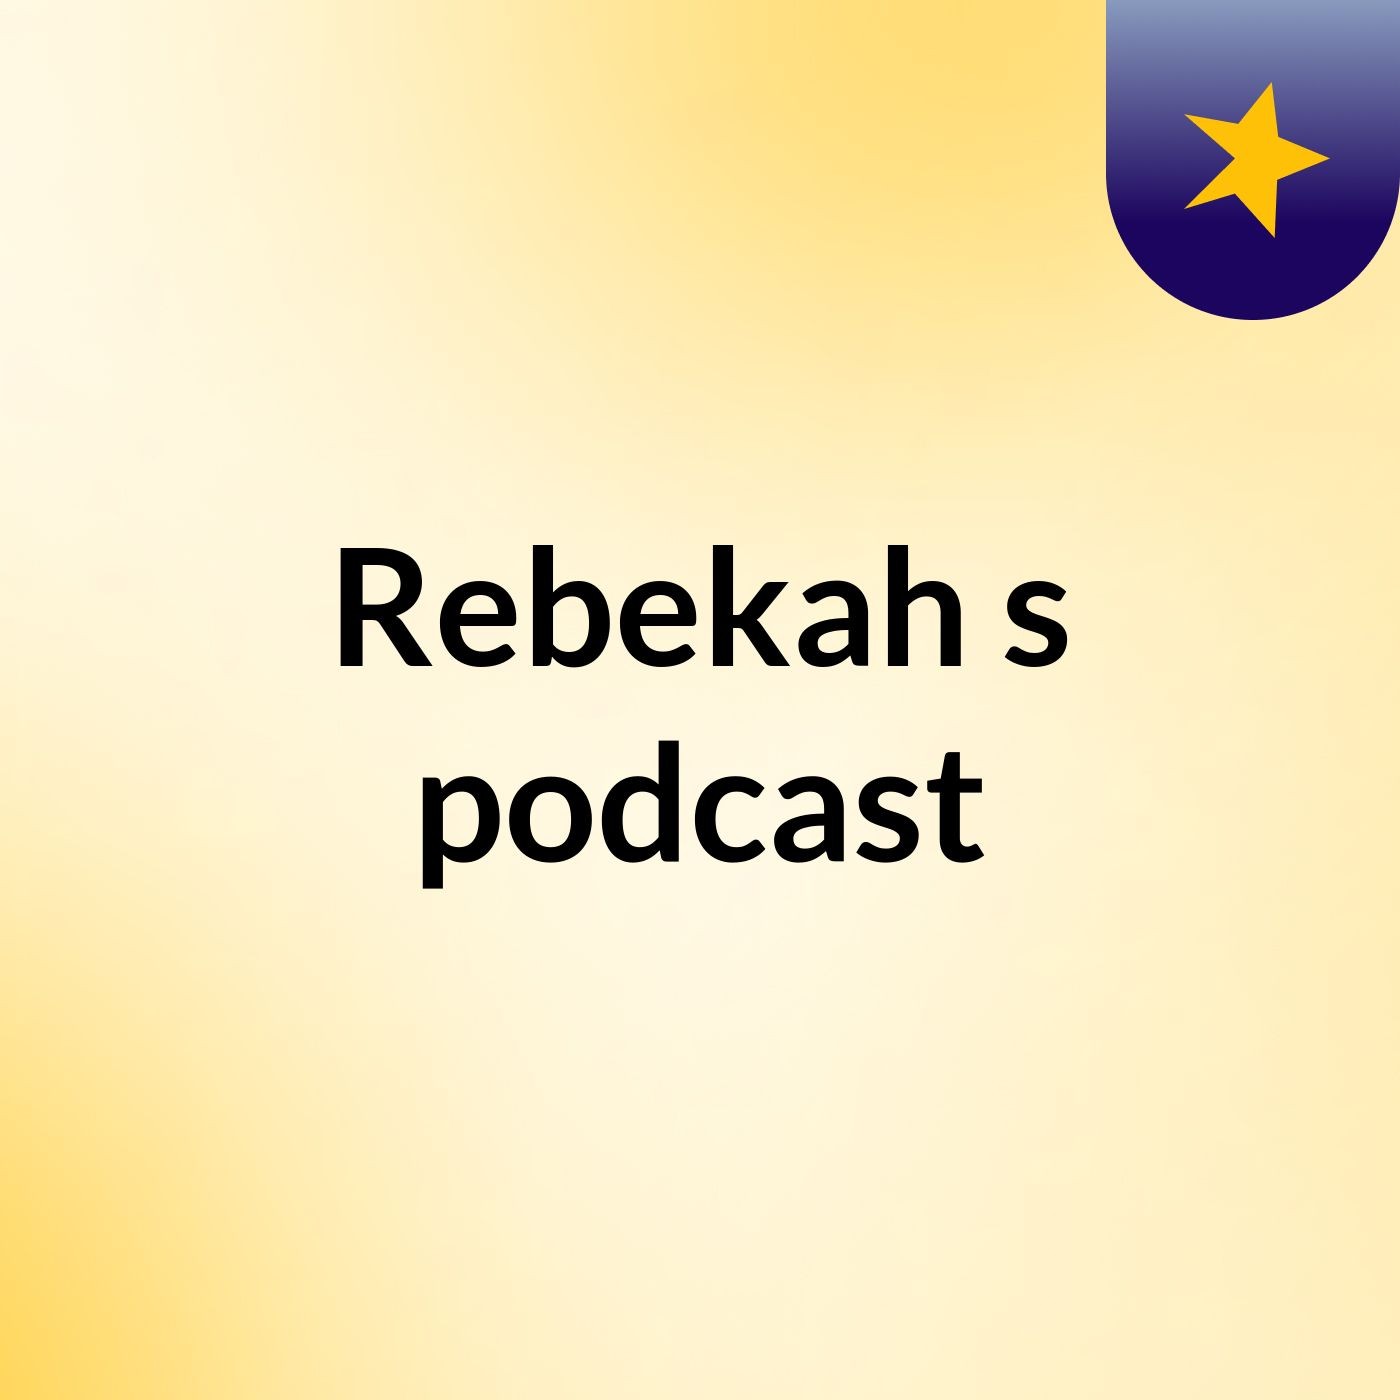 Rebekah's podcast